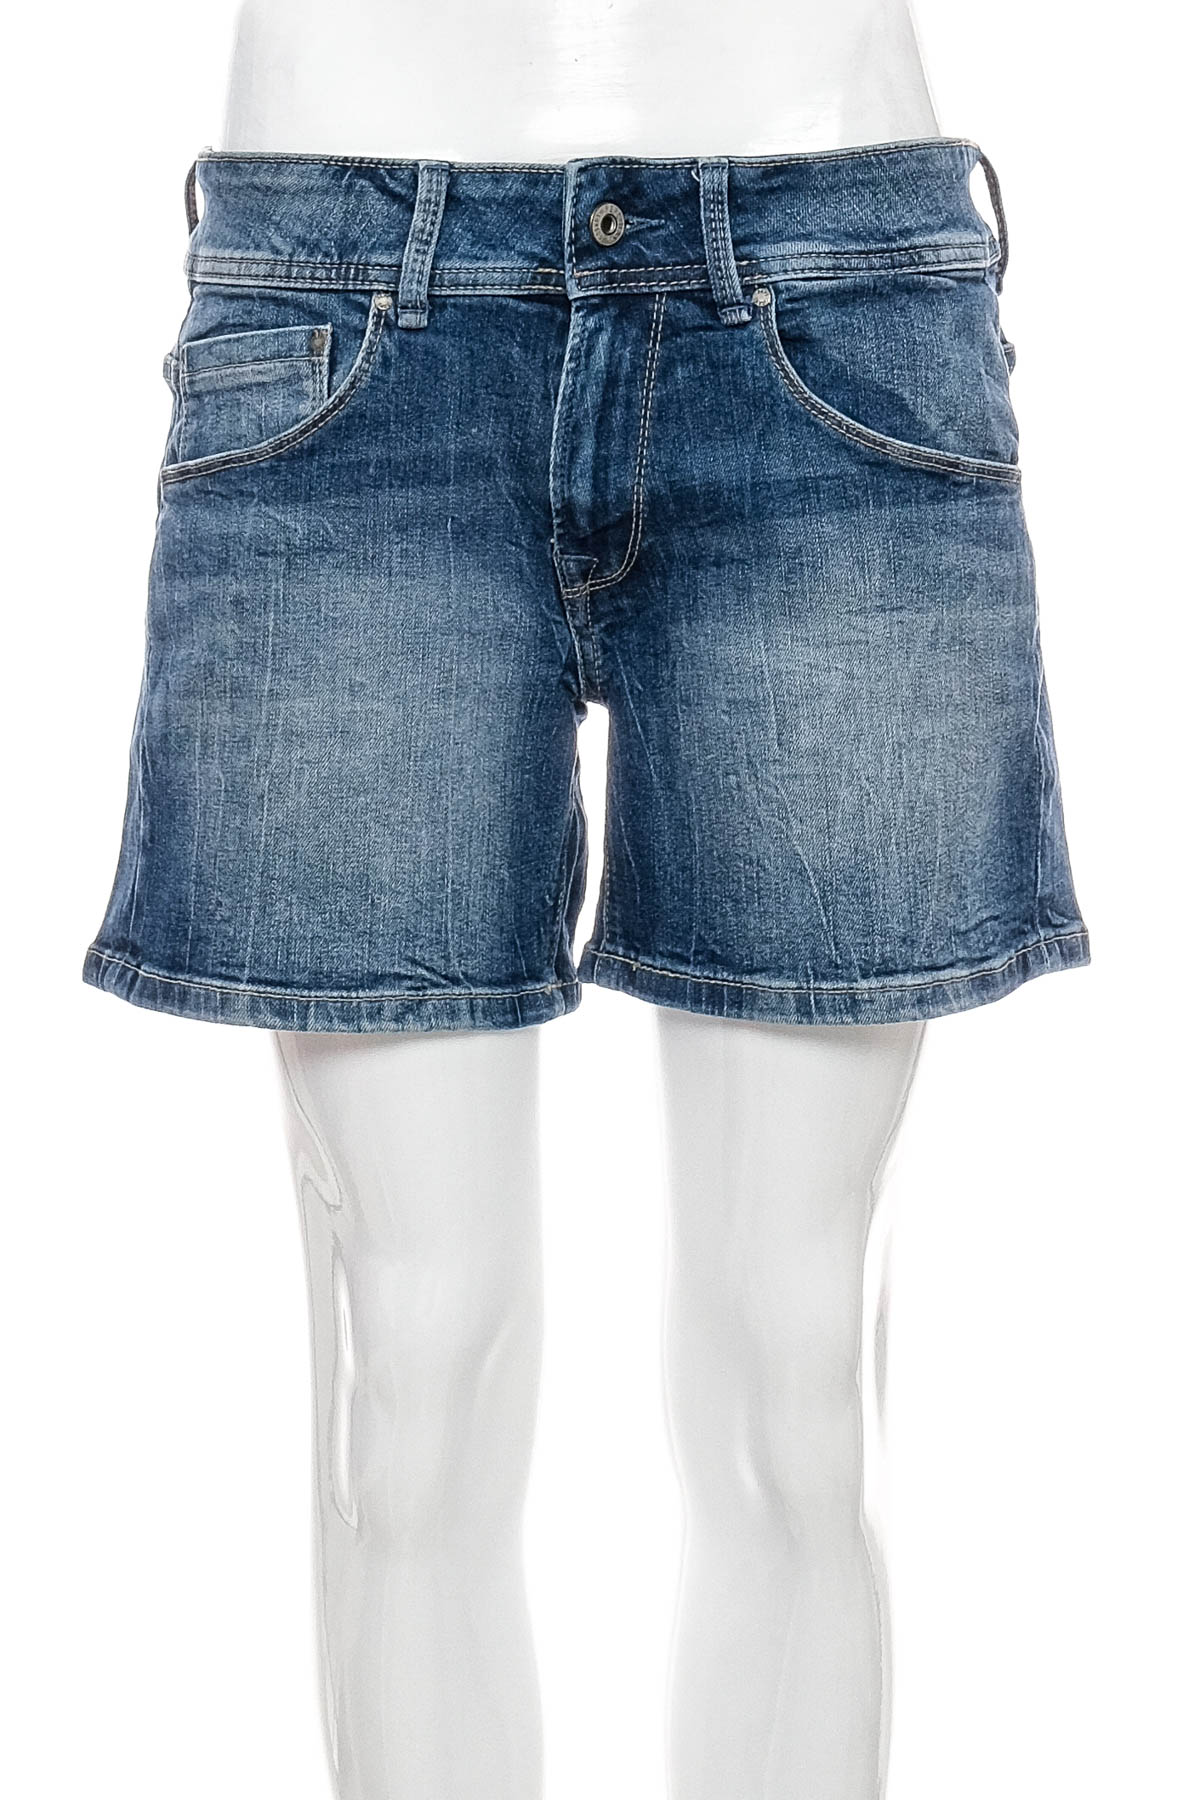 Female shorts - Pepe Jeans - 0